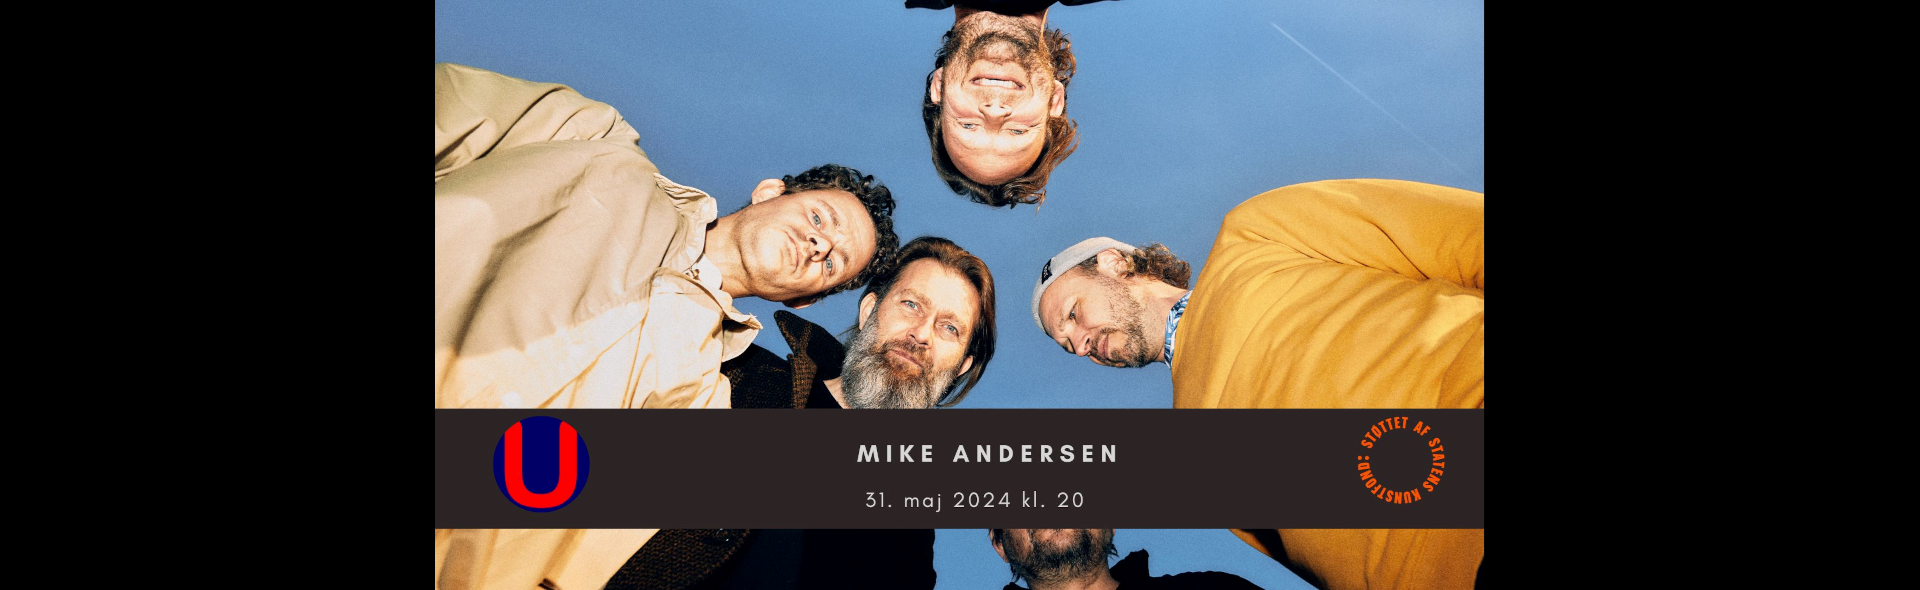 Mike Andersen Band_slide_poster